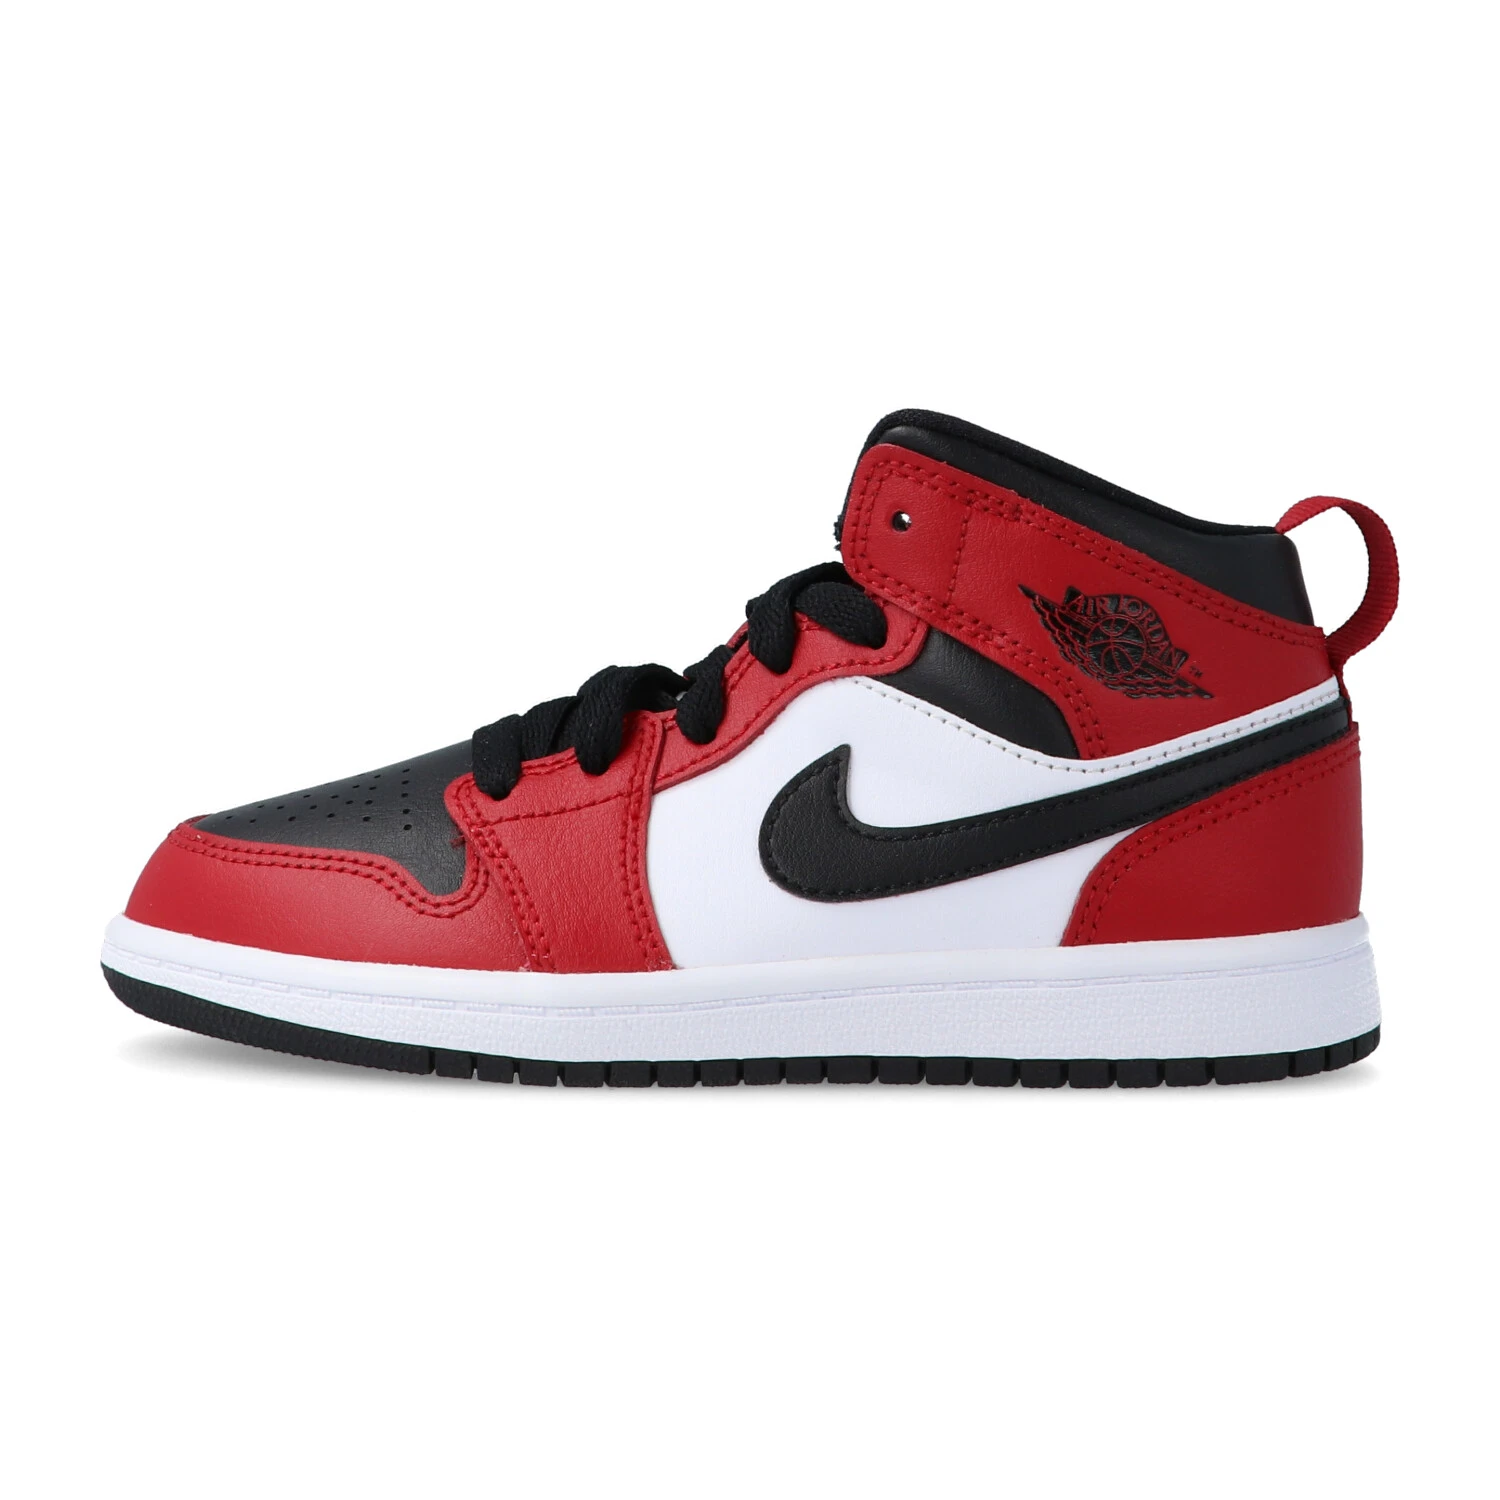 Nike Jordan 1 mid (PS) | eBay